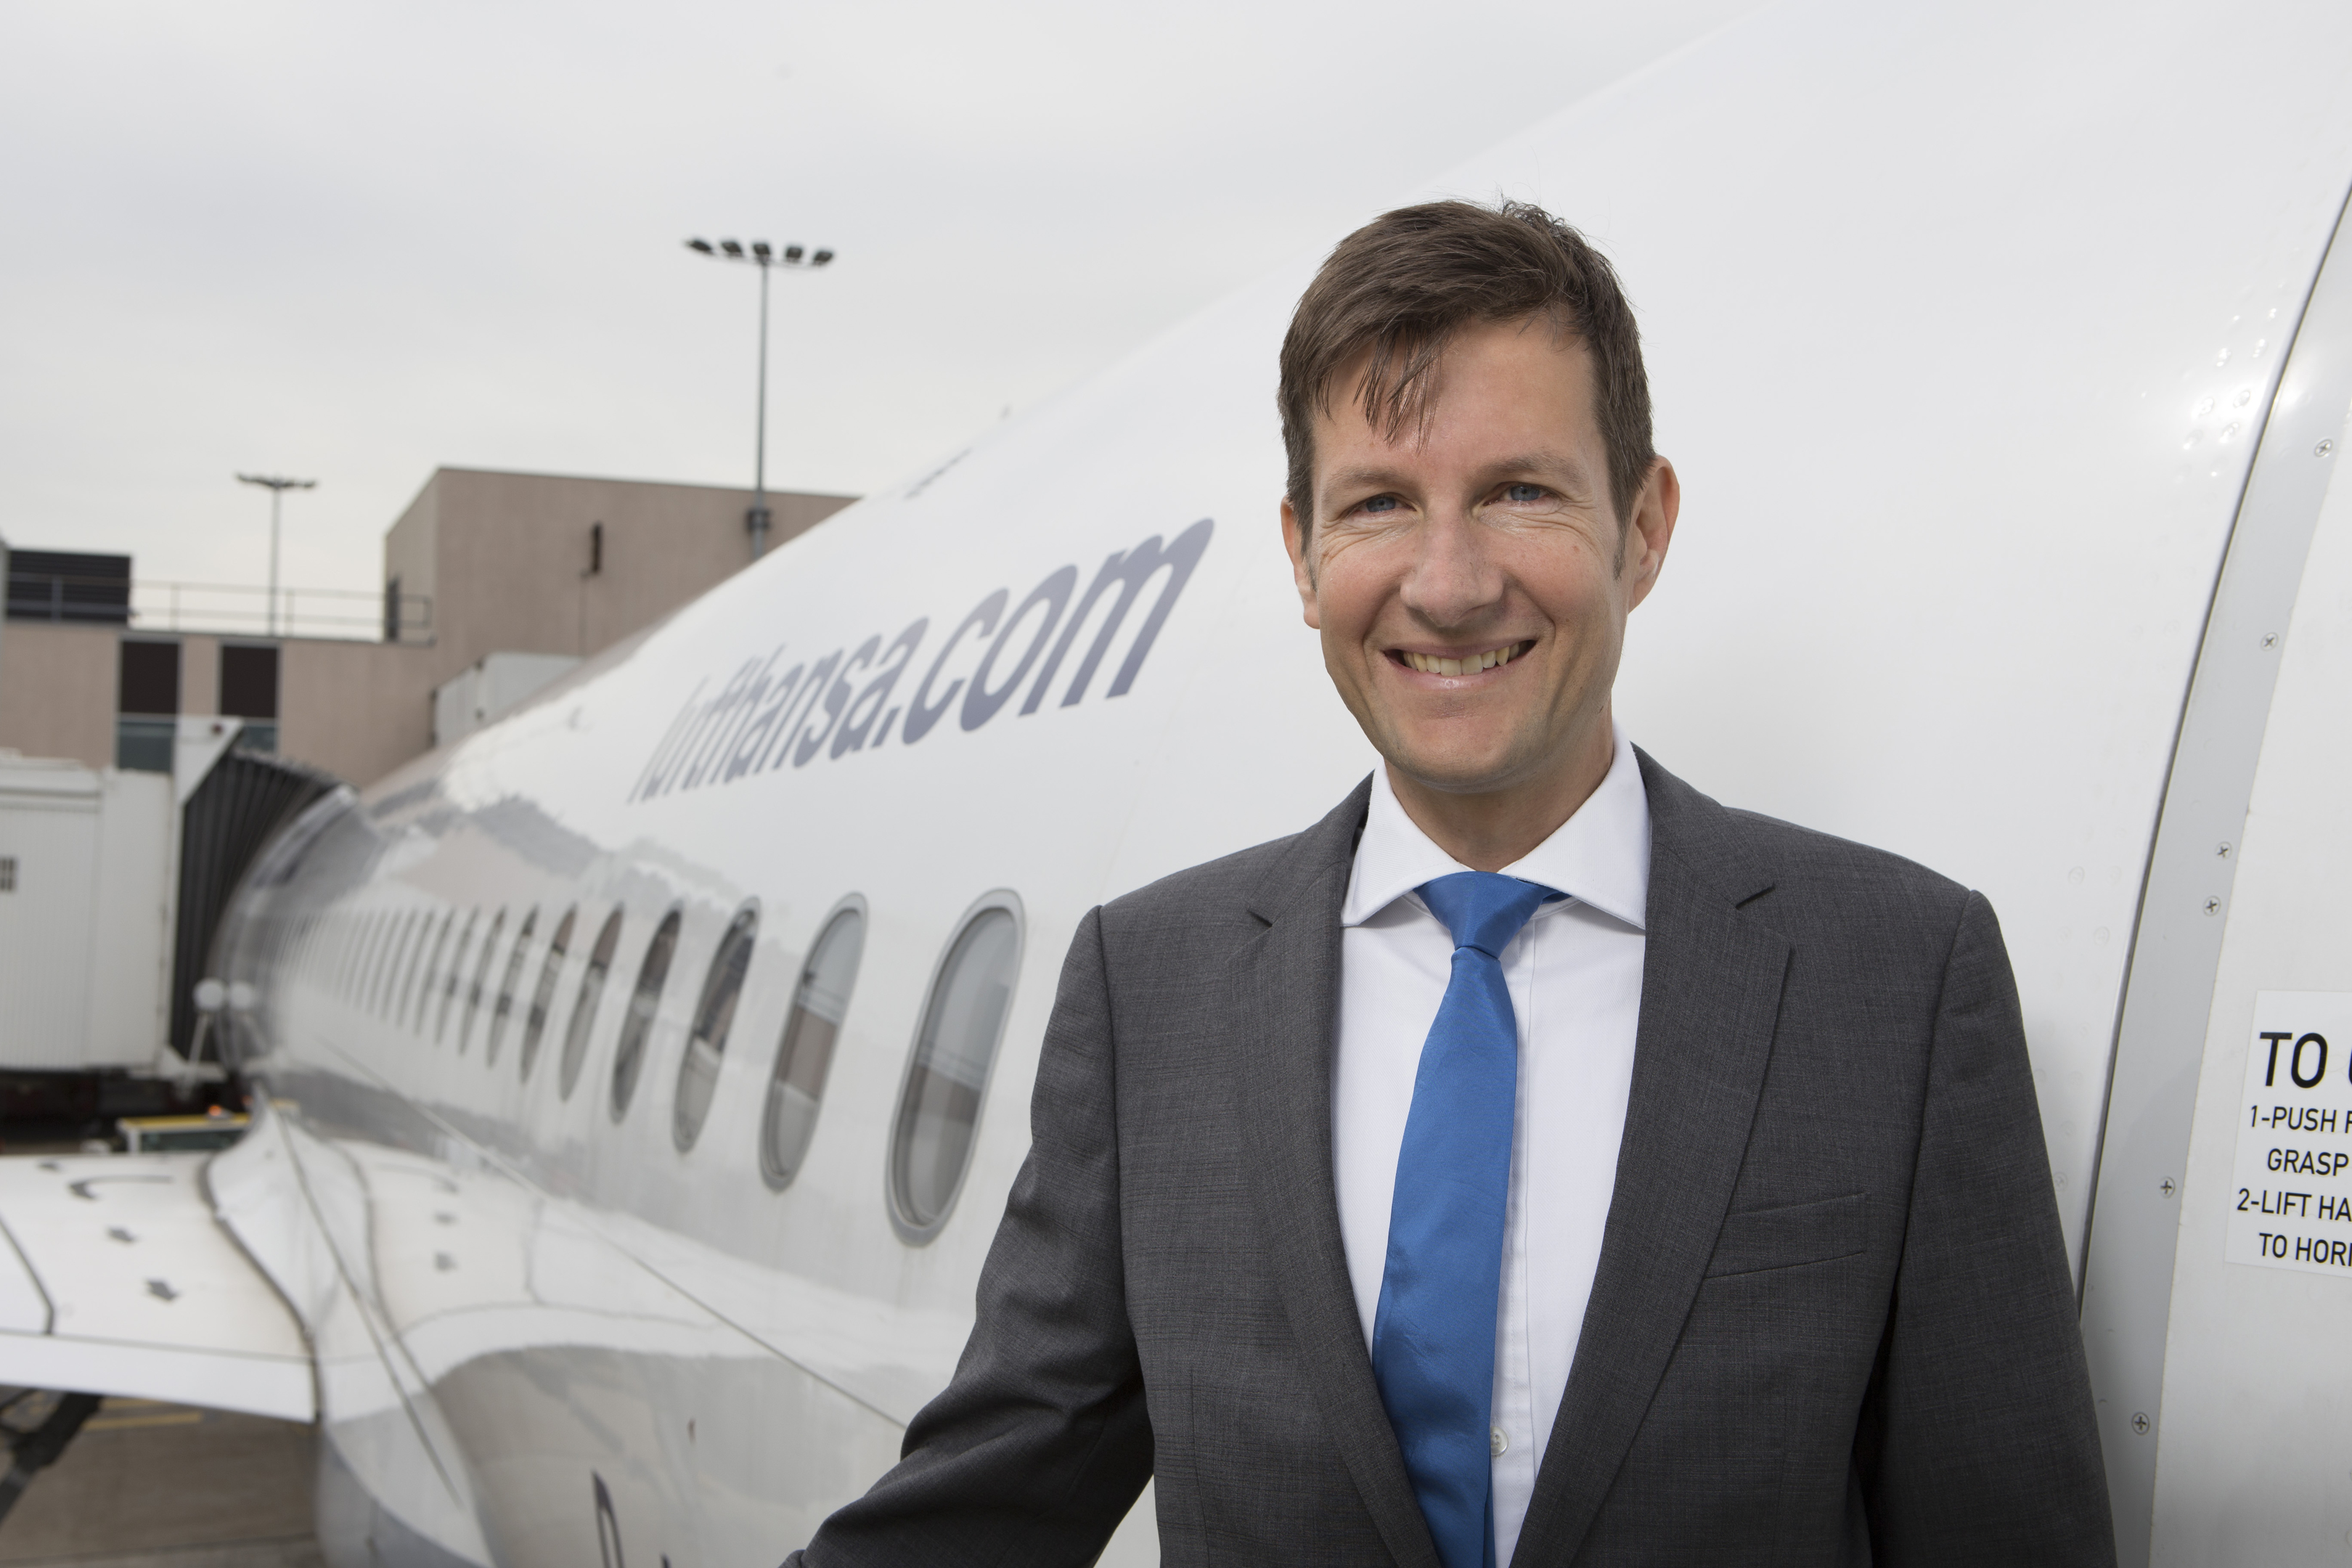 Christian Schindler, Lufthansa's UK regional director